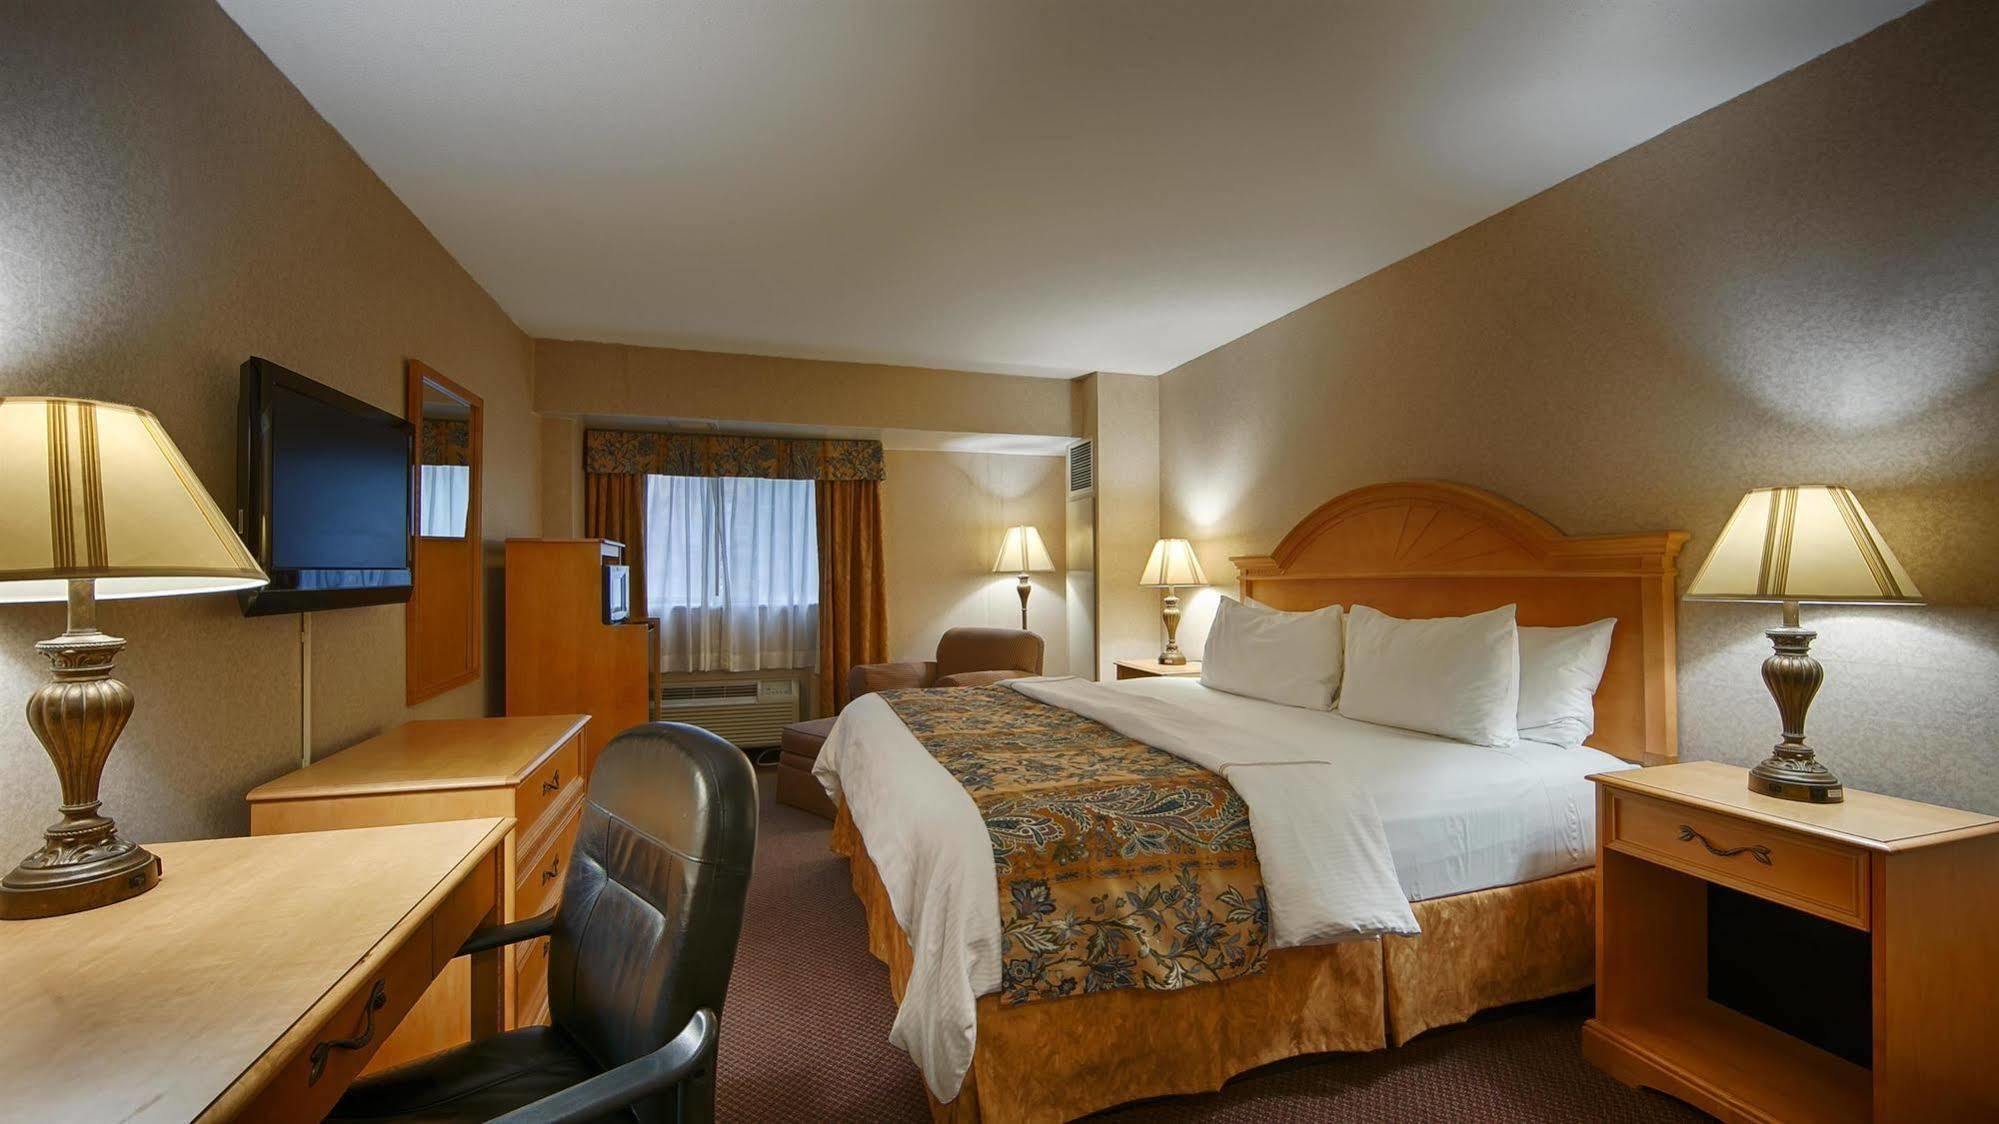 RED LION HOTEL ROSSLYN IWO JIMA ARLINGTON, VA 2* (United States) - from US$ 156 |